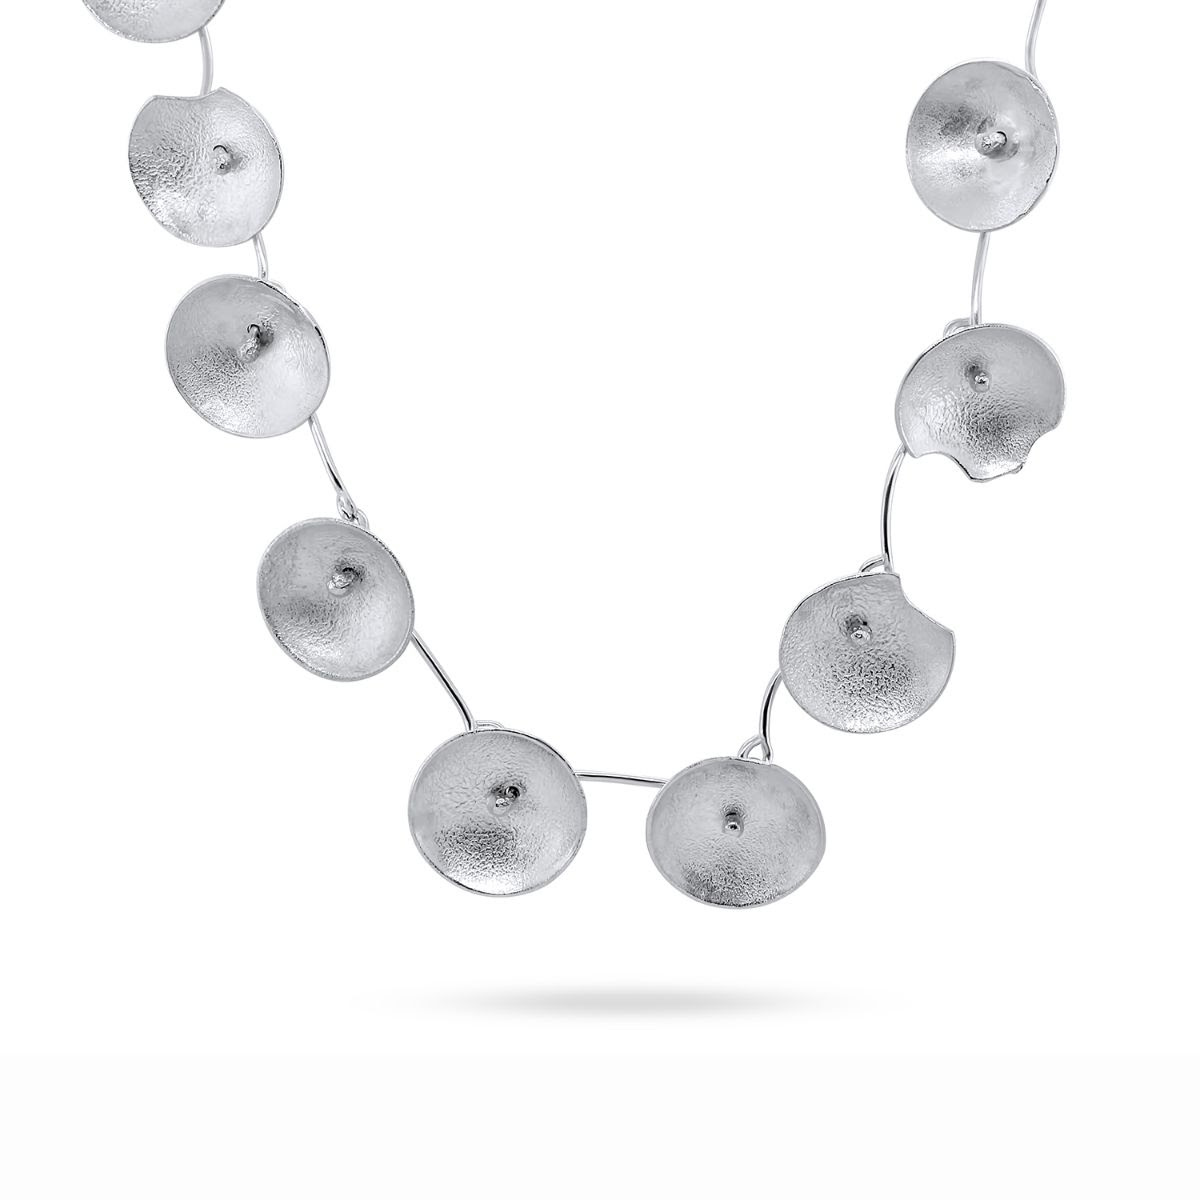 large daisy necklace by shimara carlow at designyard contemporary jewellery dublin ireland